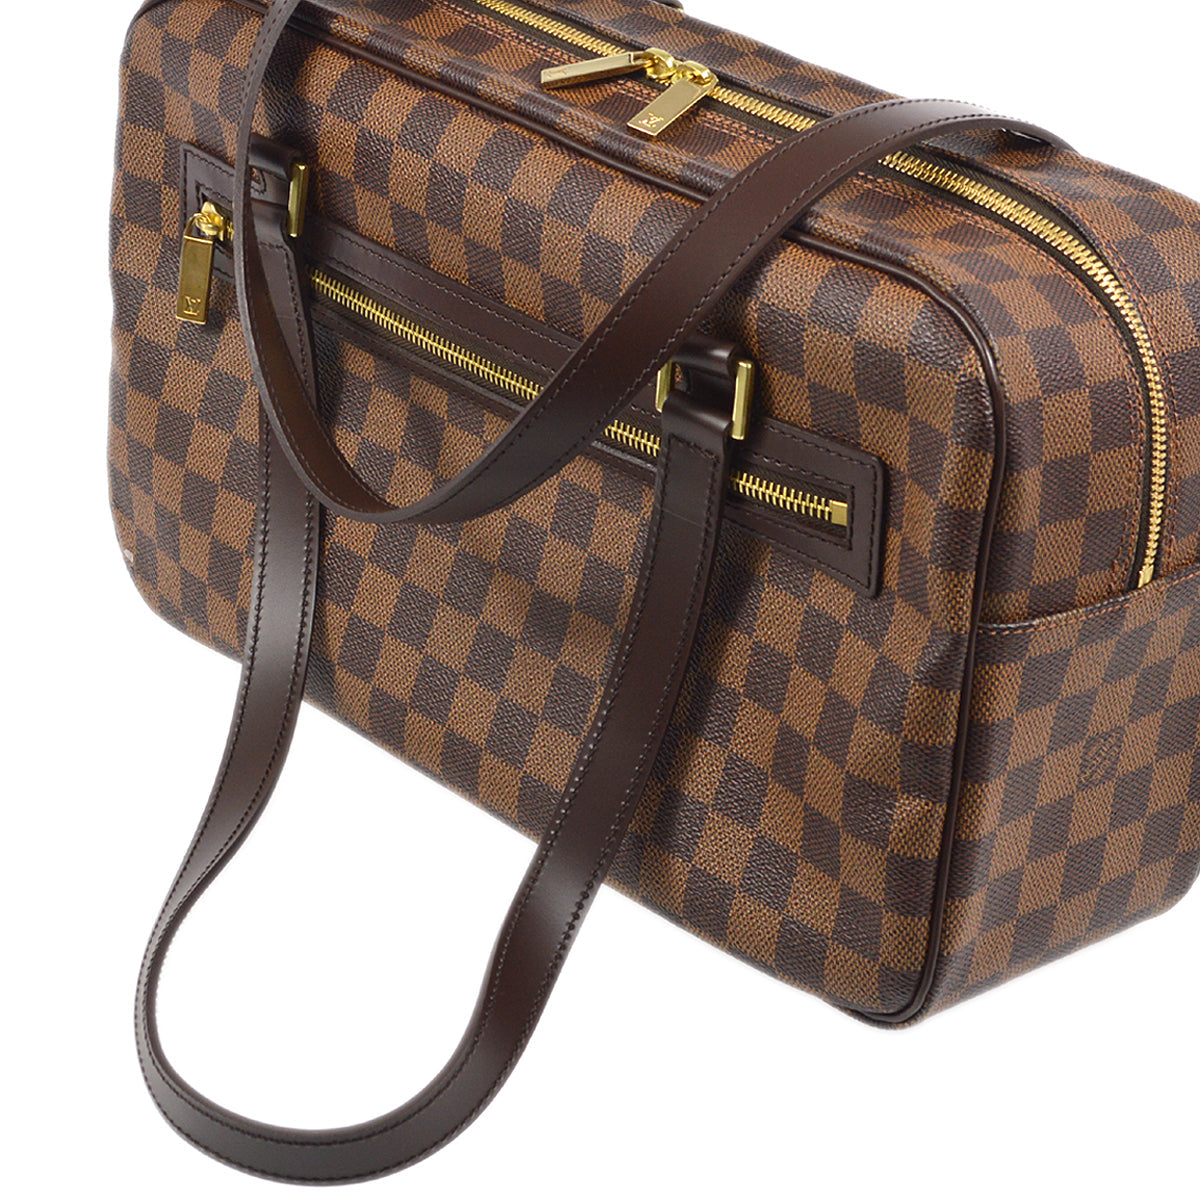 Louis Vuitton Cite GM Handbag Purse Damier Brown Ebene N48091 FL0095 97623